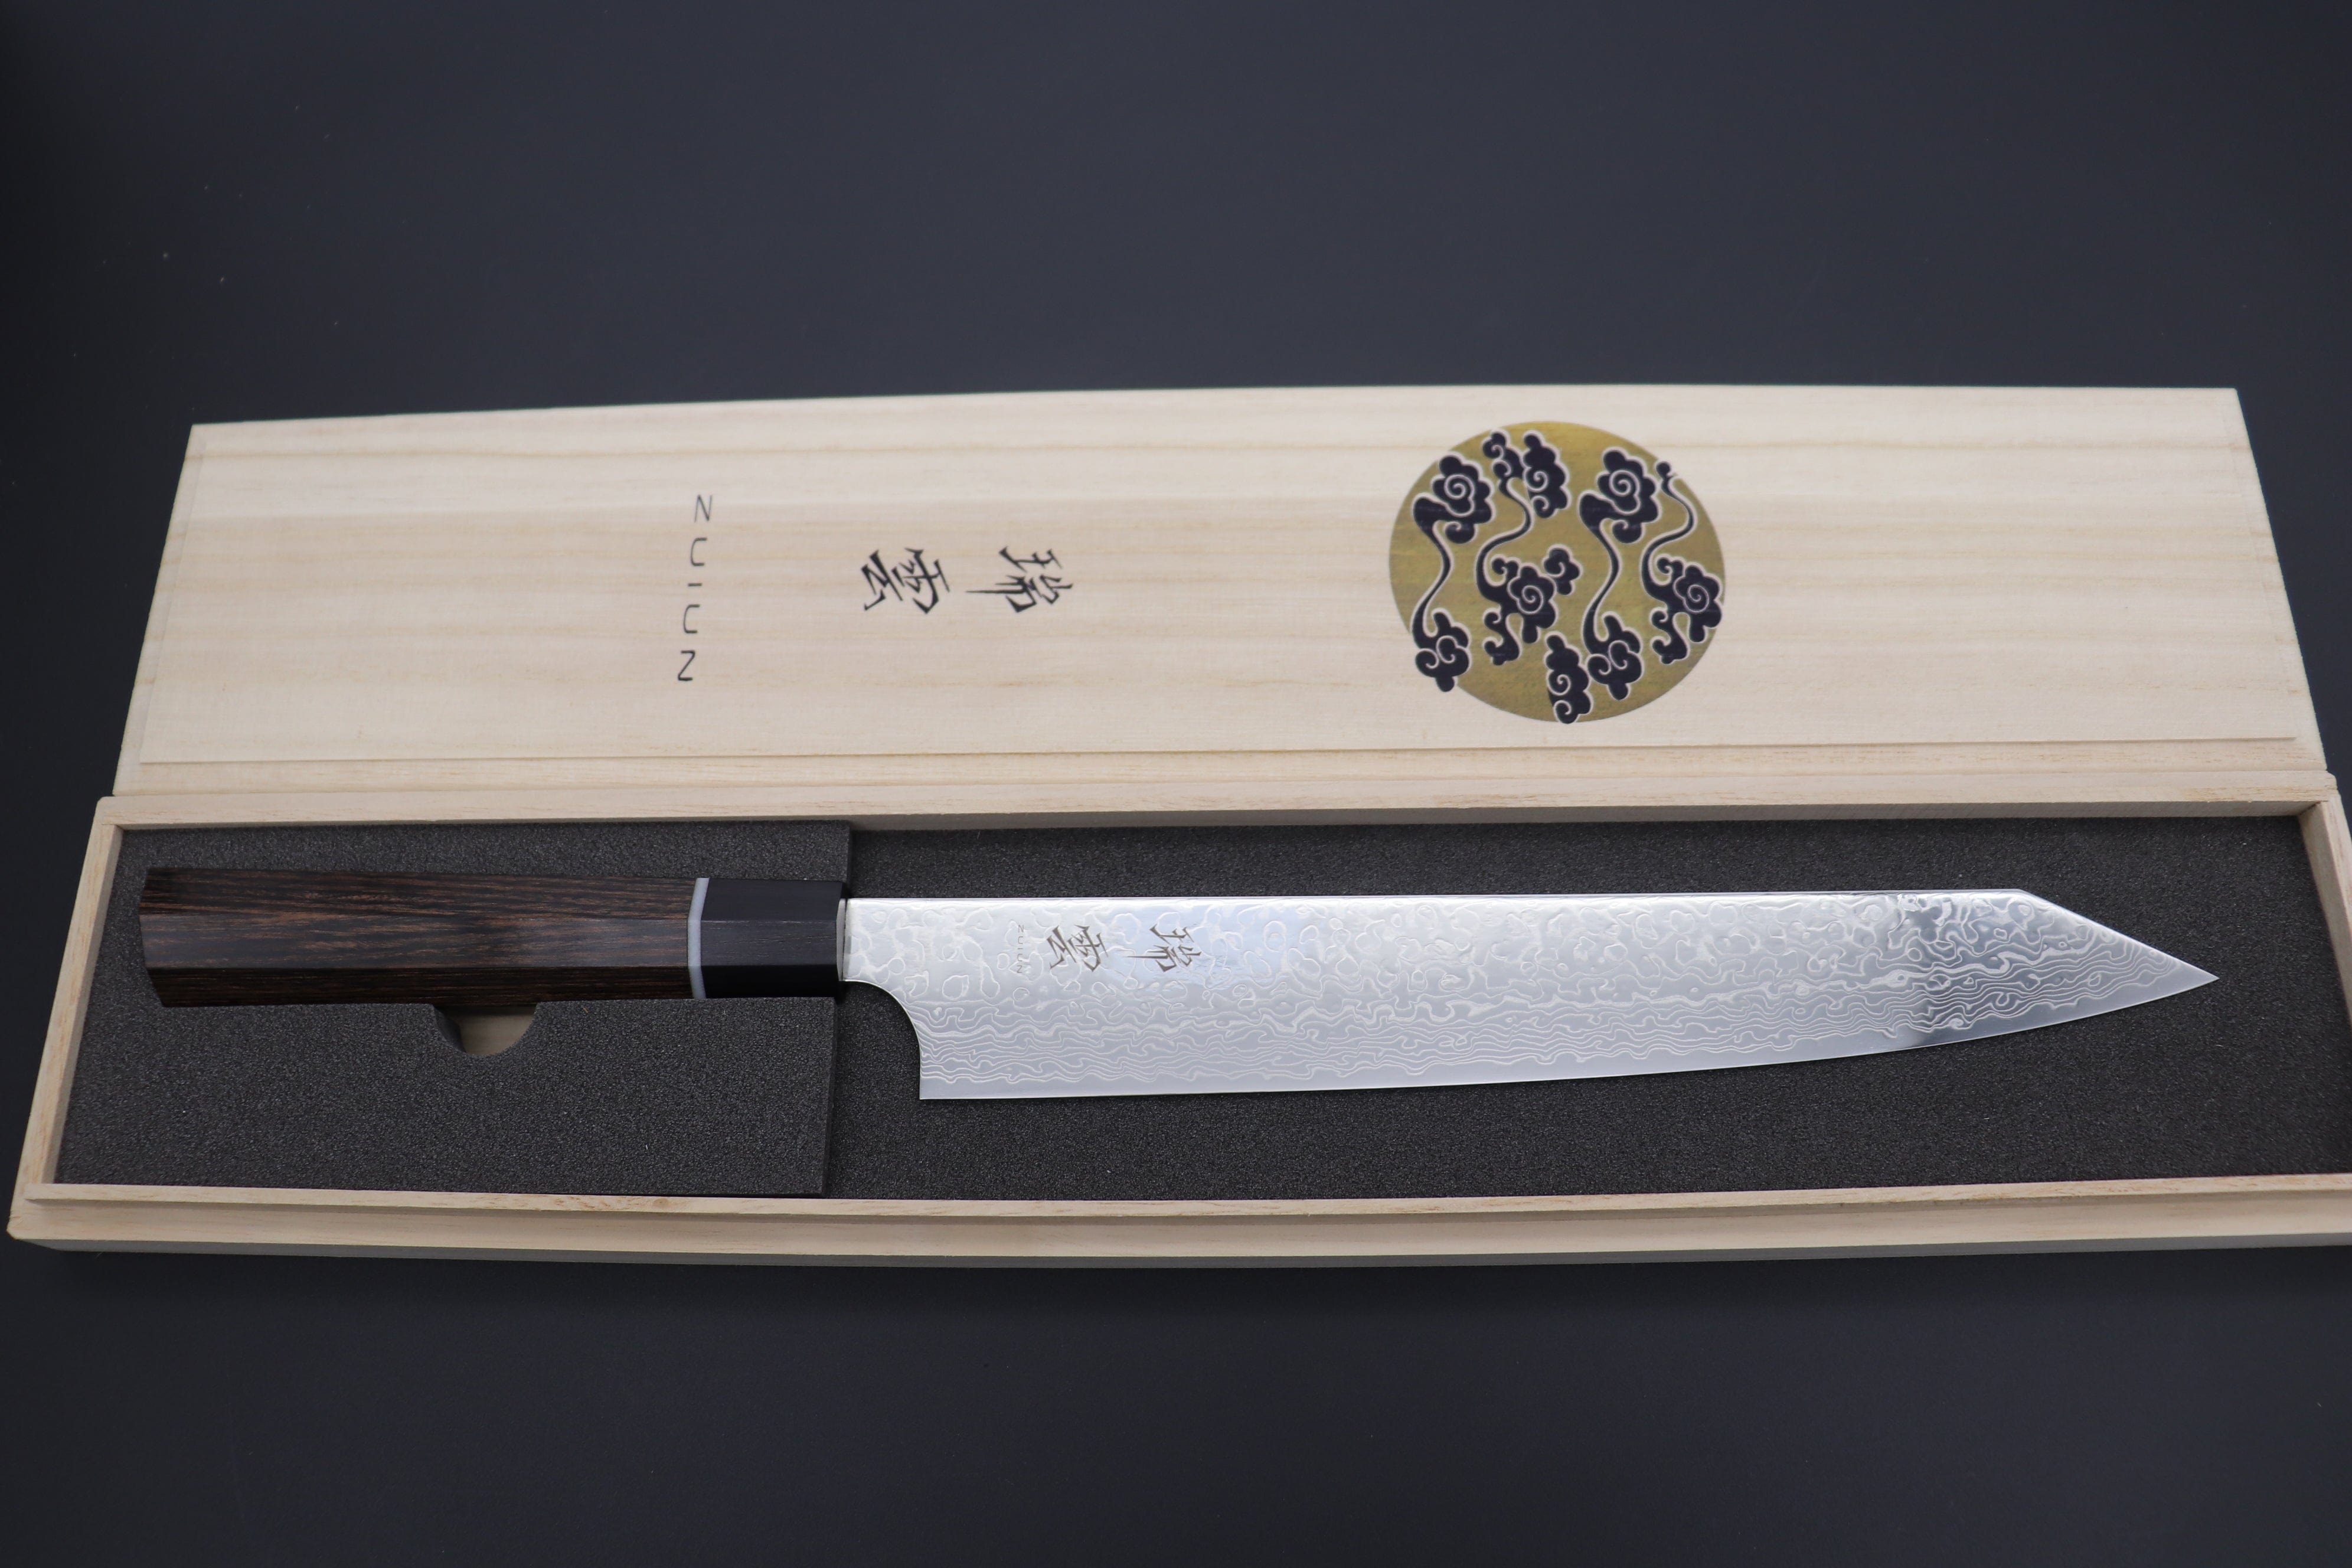 Sujihiki Japanese kitchen knife Seki Kanetsugu Pro J 6009 21cm for sale